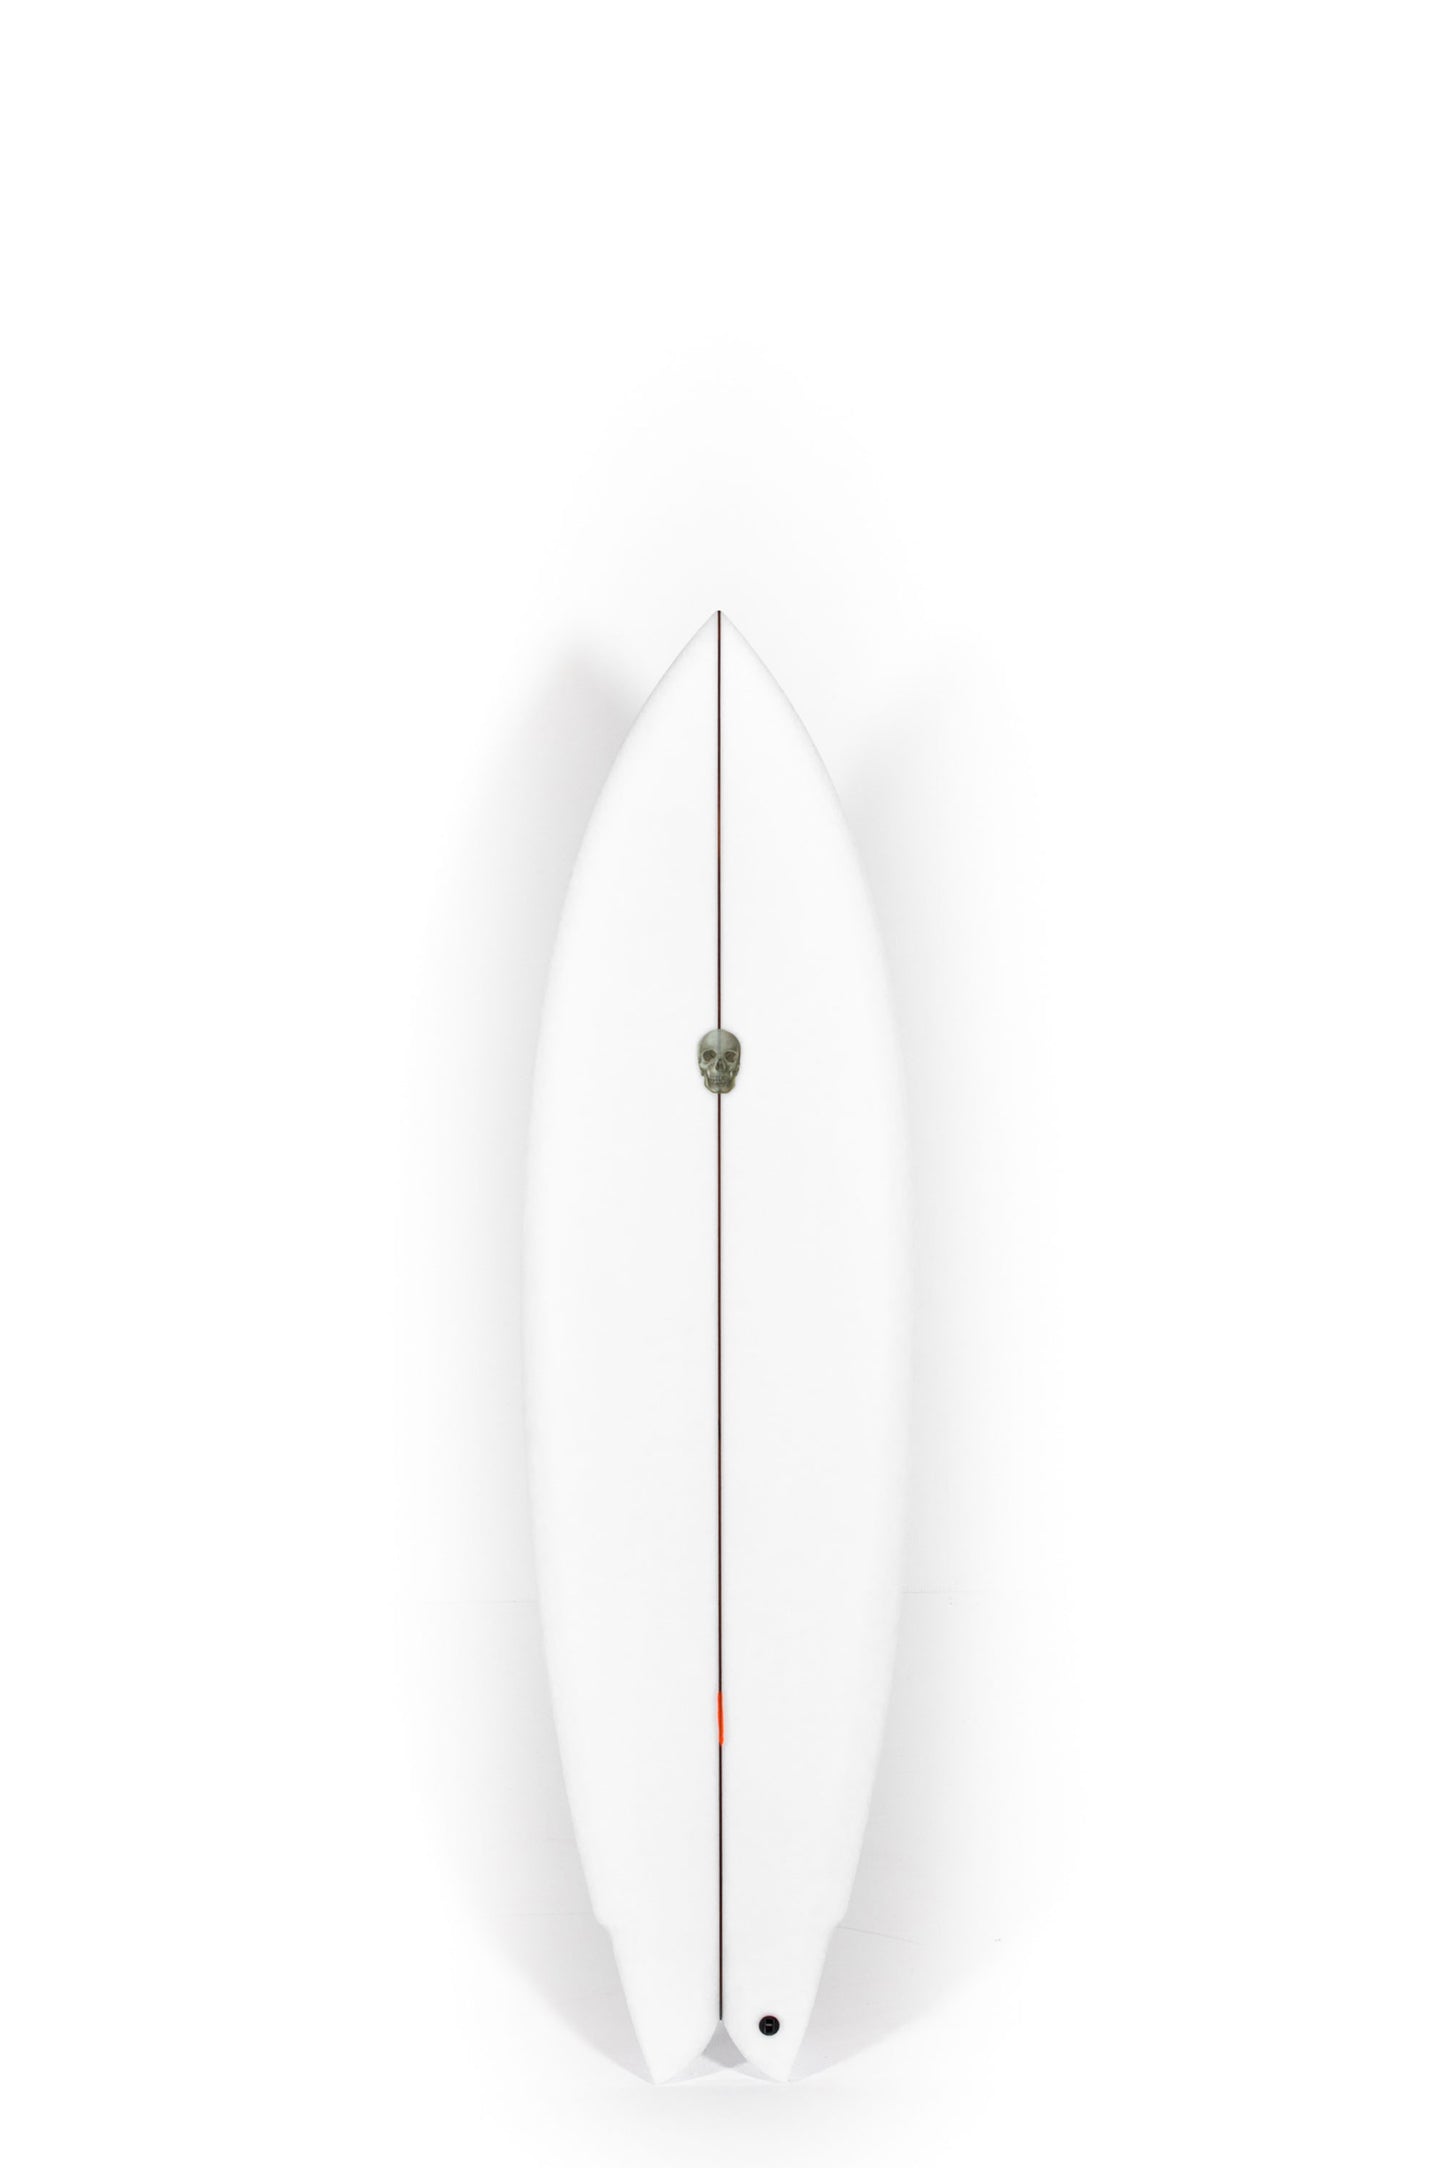 Pukas Surf Shop - Christenson Surfboard  - WOLVERINE by Chris Christenson - 6’4 x 20 5/8 x 2 9/16 - CX05371